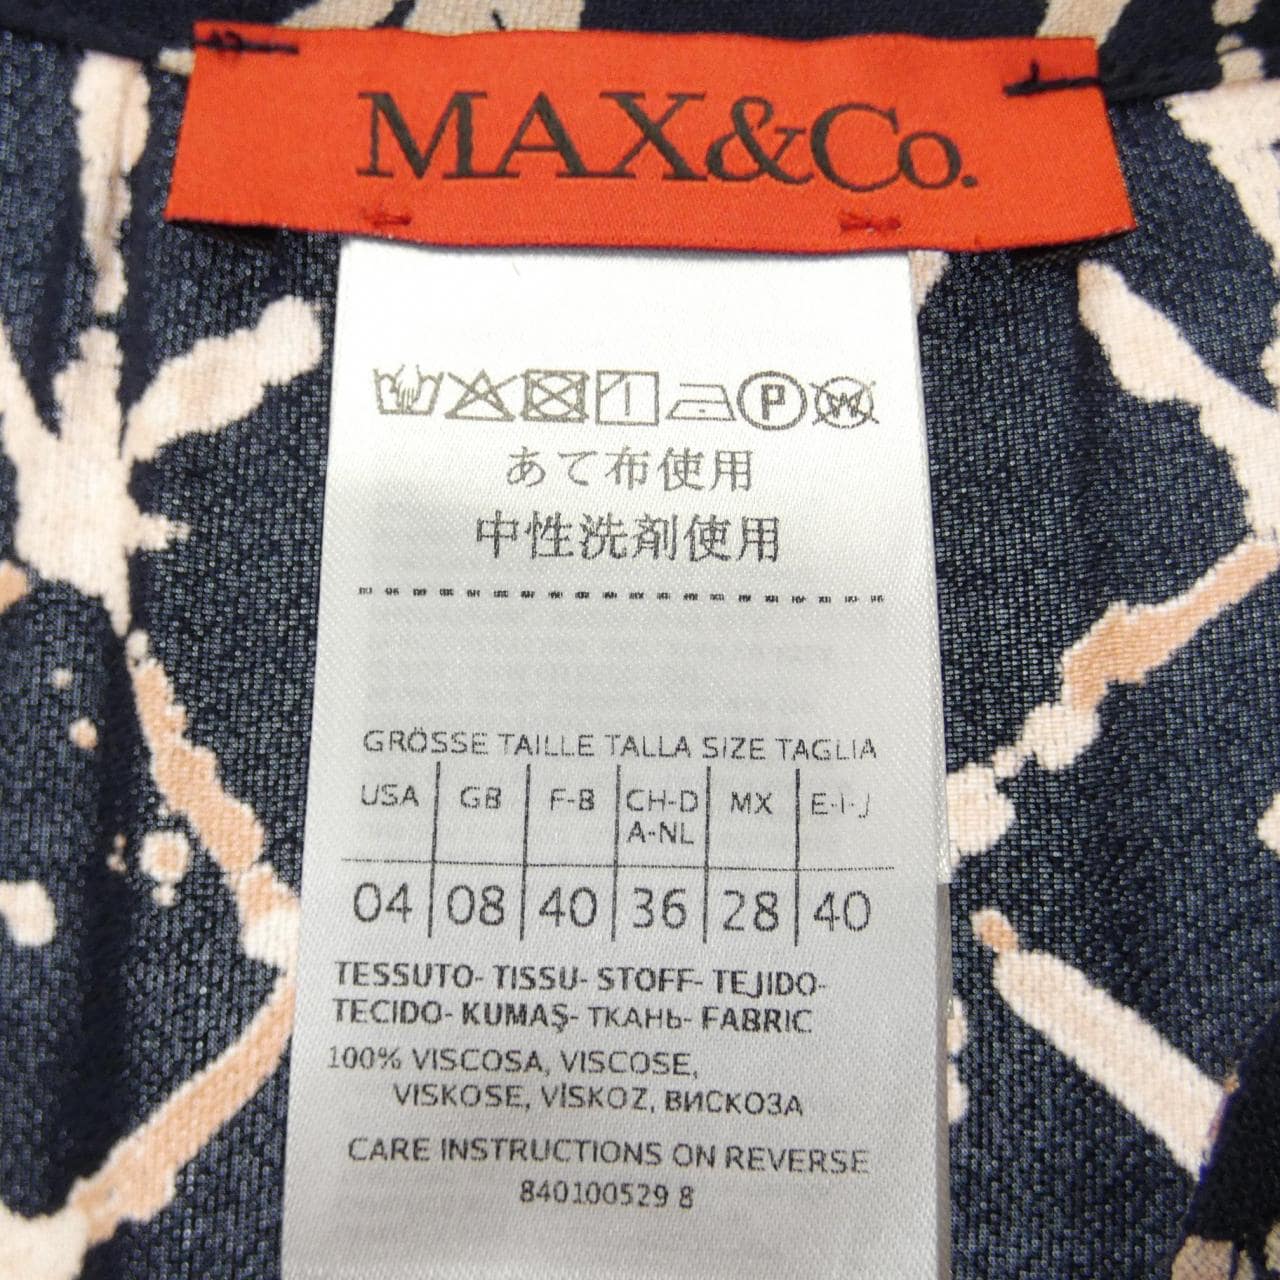 超棒Max&Co连衣裙